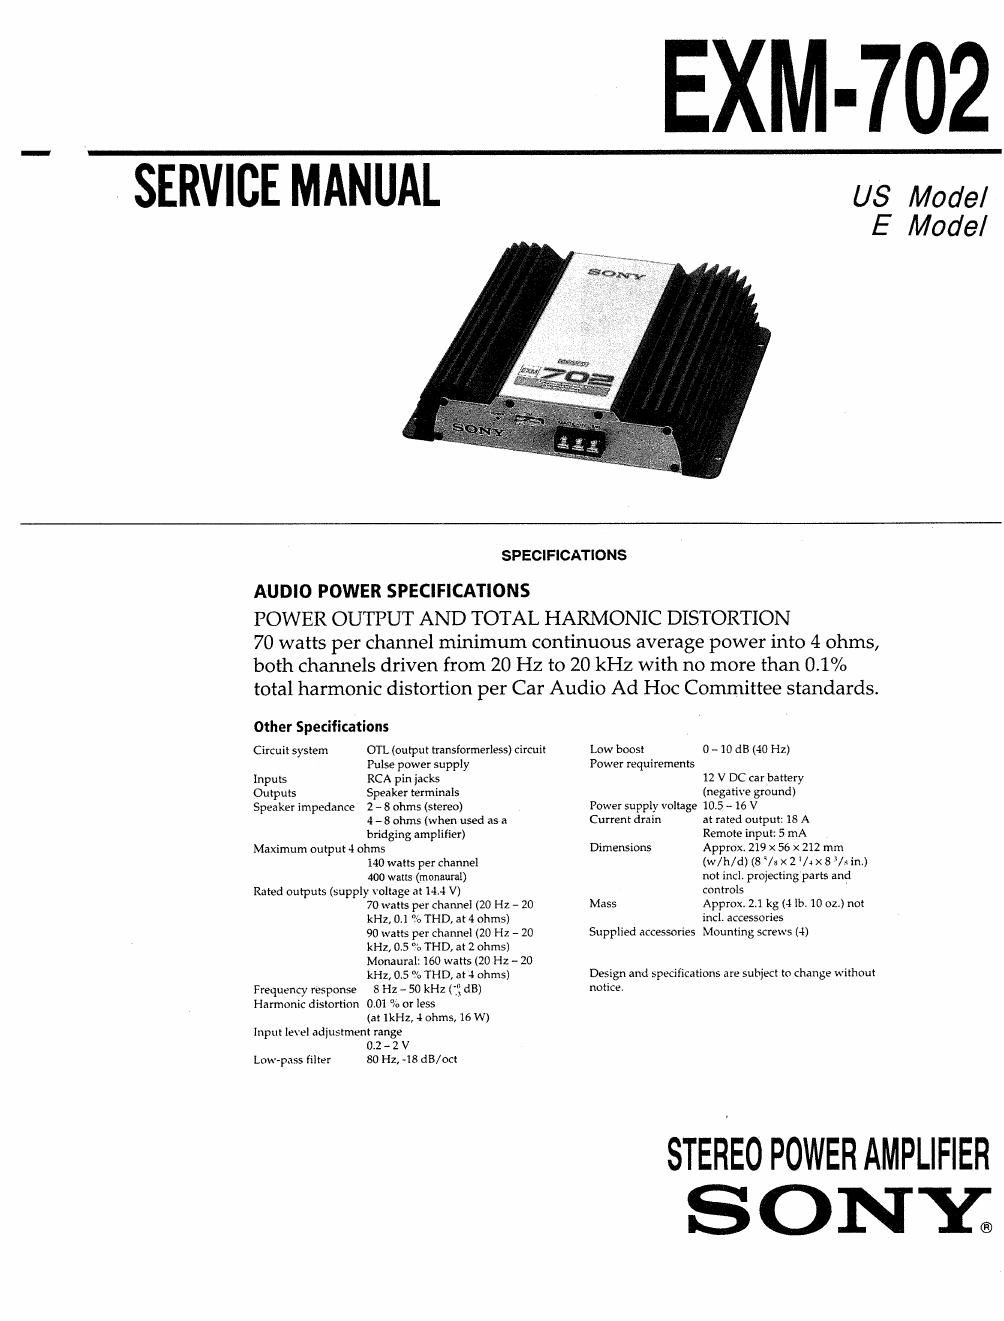 sony exm 702 service manual